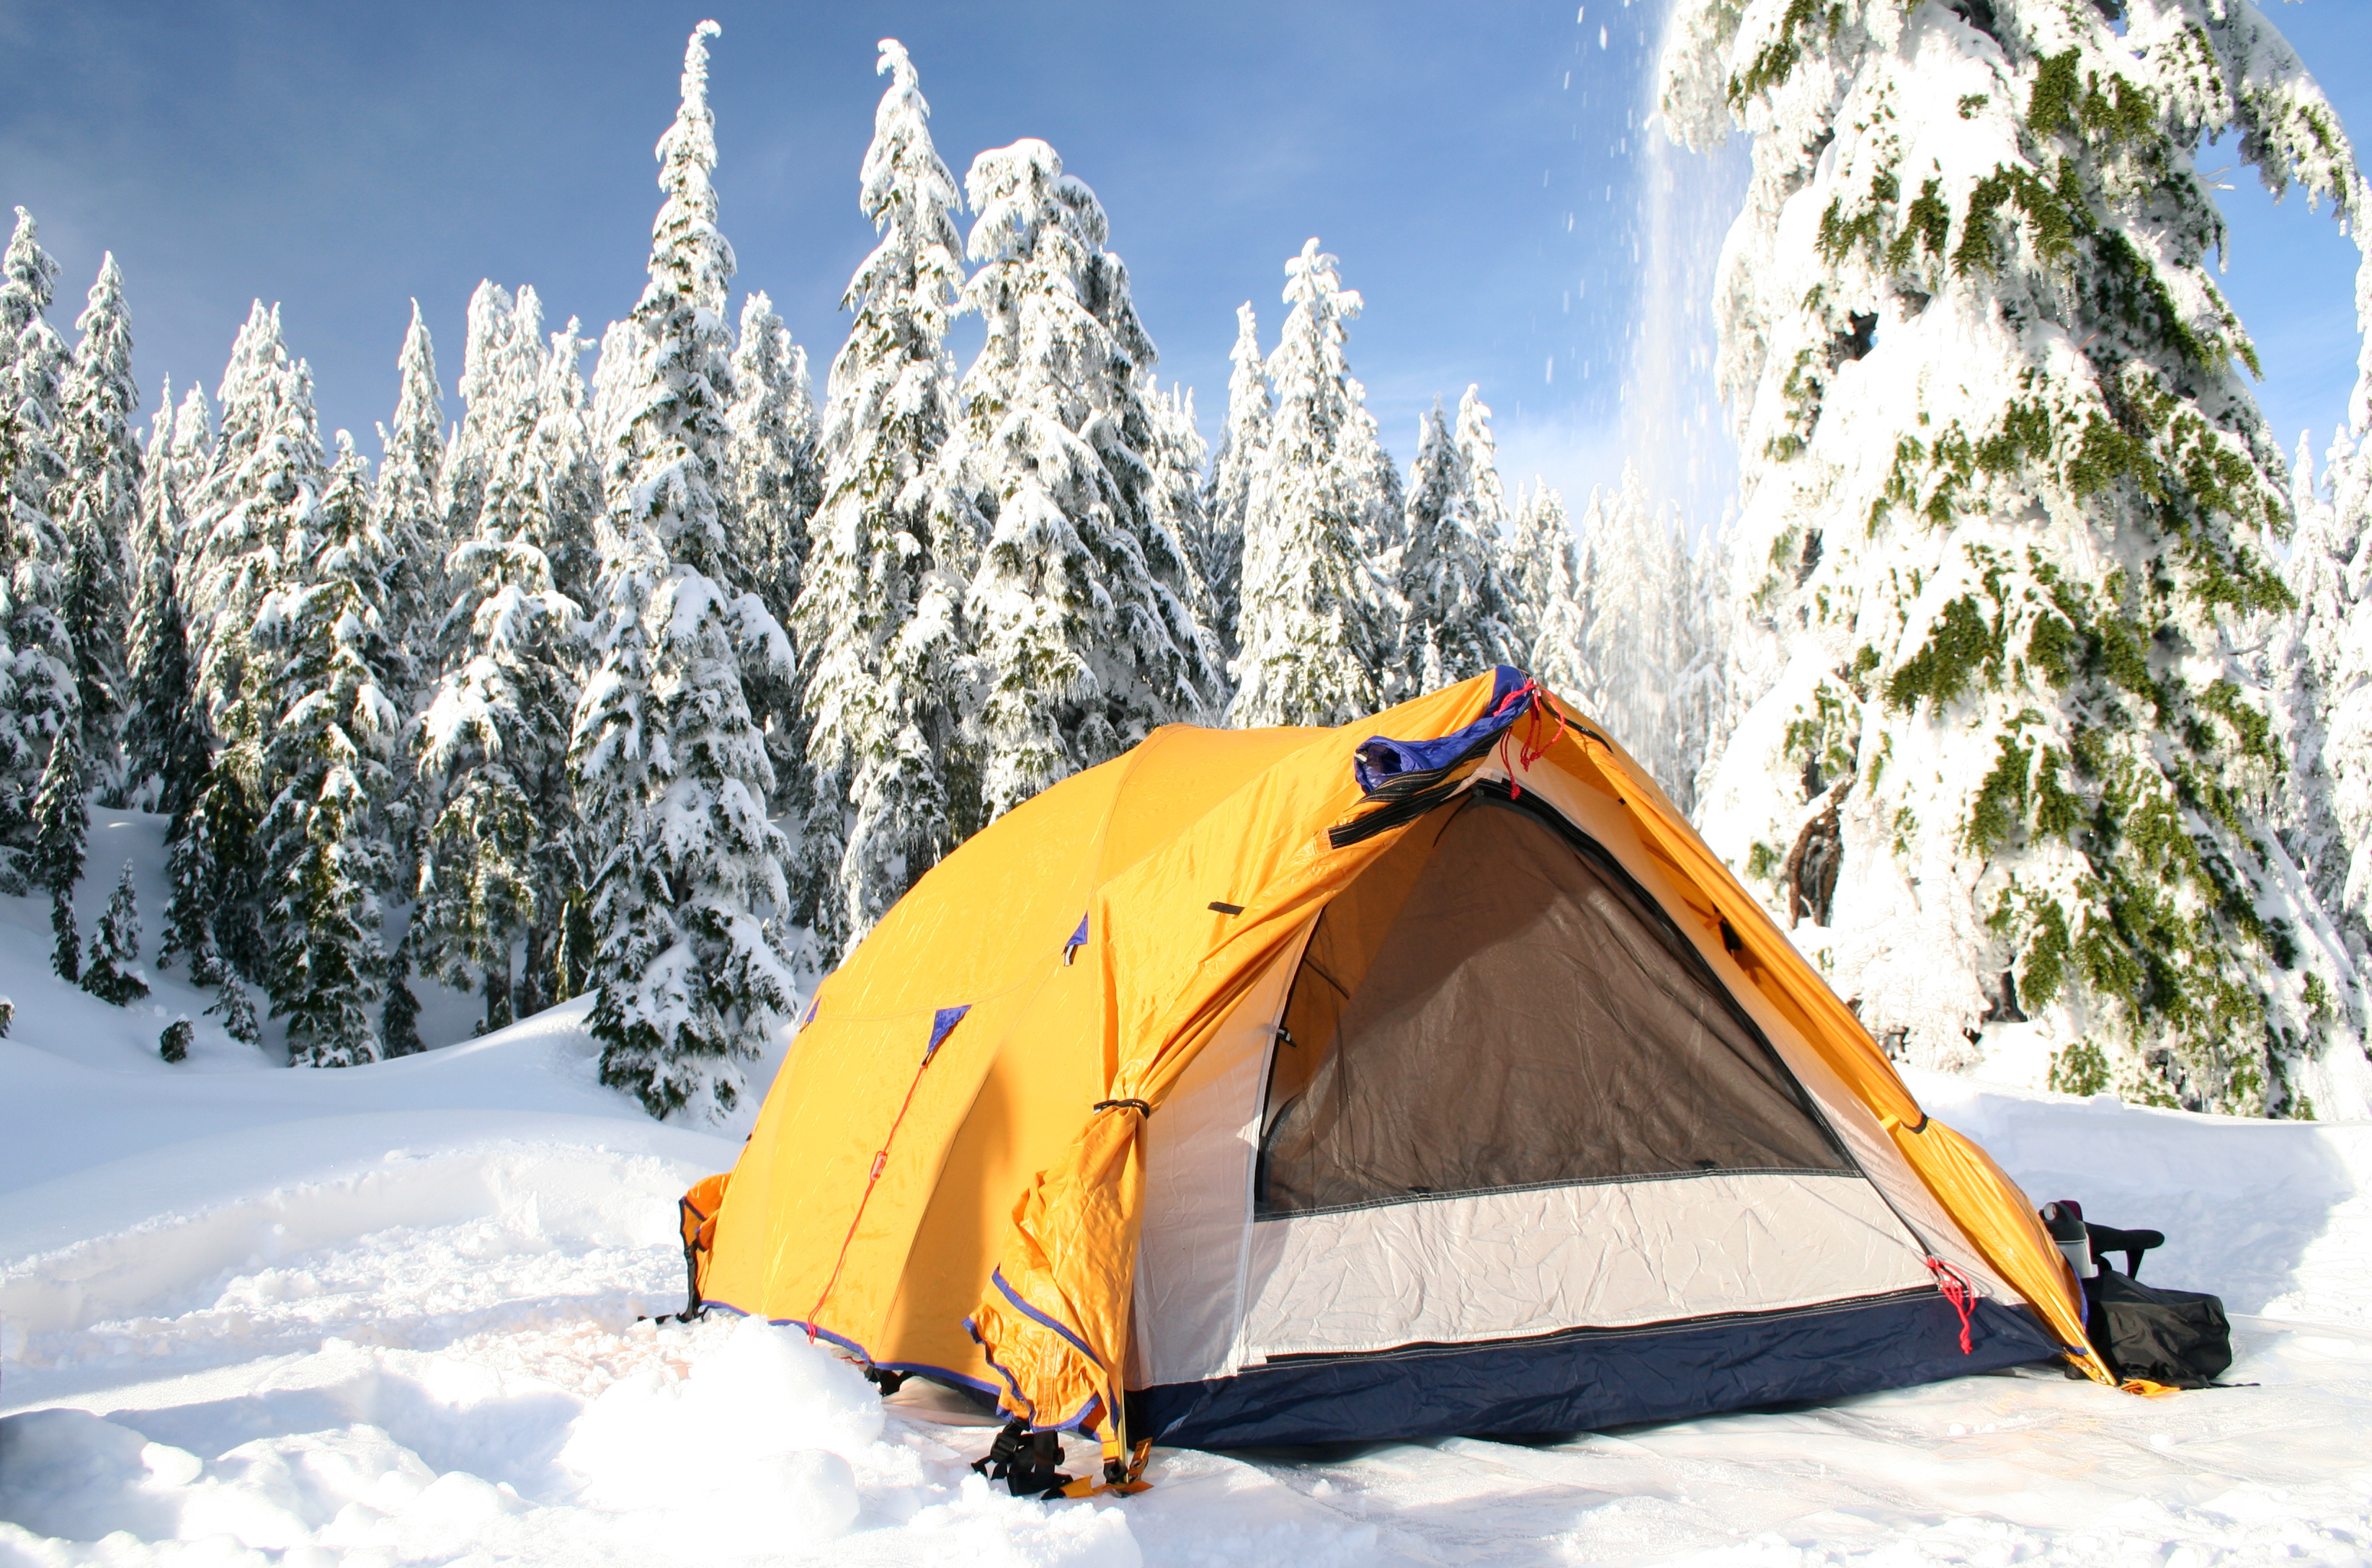 Ice camp. Best Camp Ontario 3 палатка. Палатка Nova Tour ай Петри 2 si. Палатка Alaska Trek 2. Палатка Полярис зимняя.